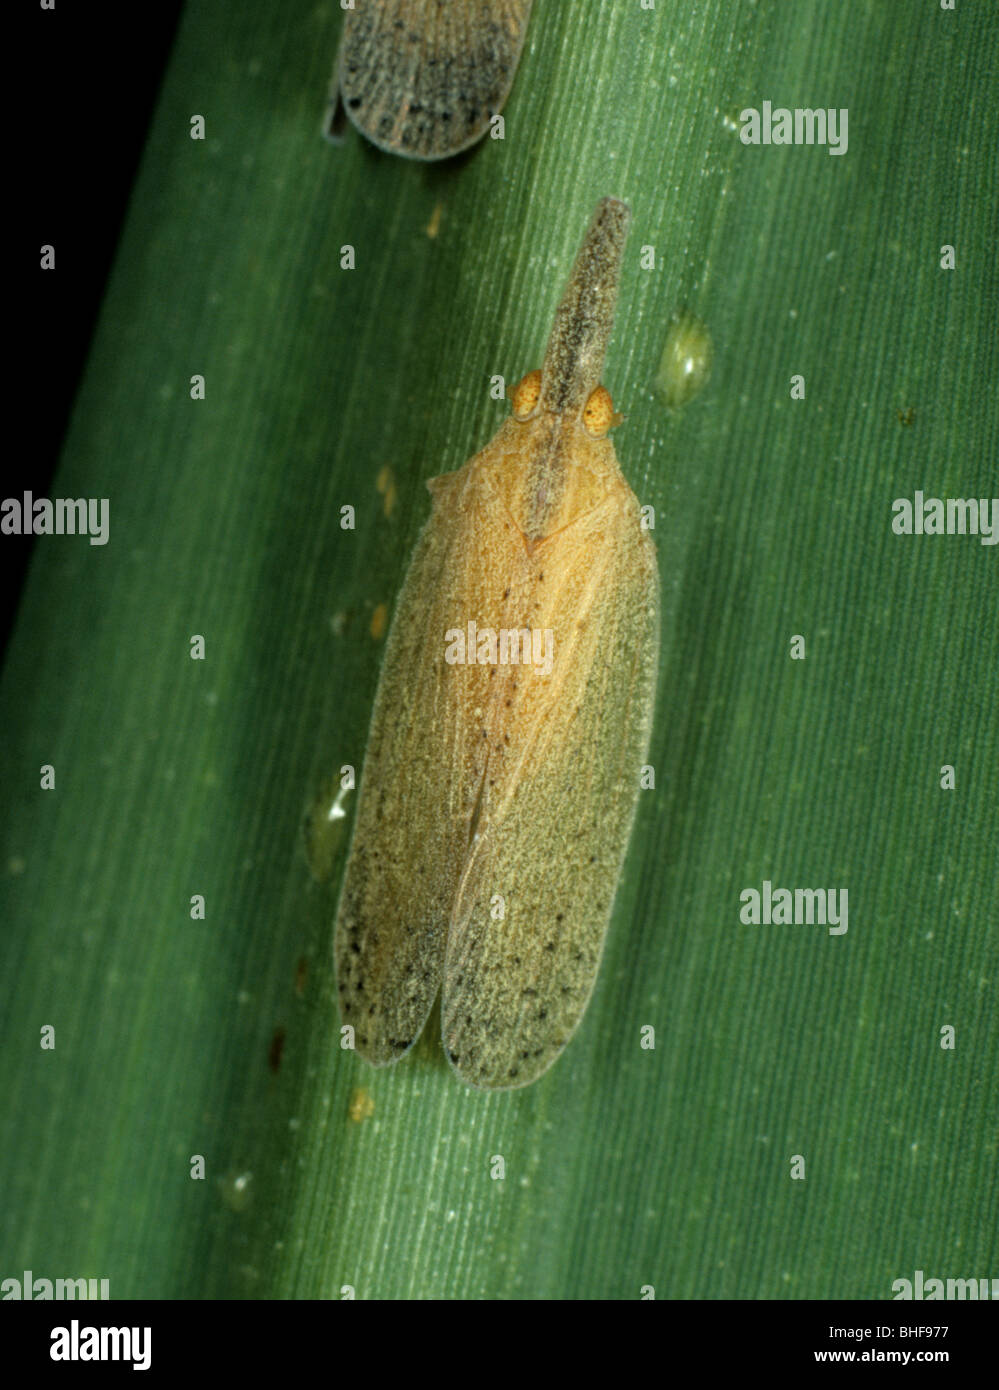 Adult Indian sugarcane leafhopper (Pyrilla perpusilla) on a sugar cane leaf Stock Photo